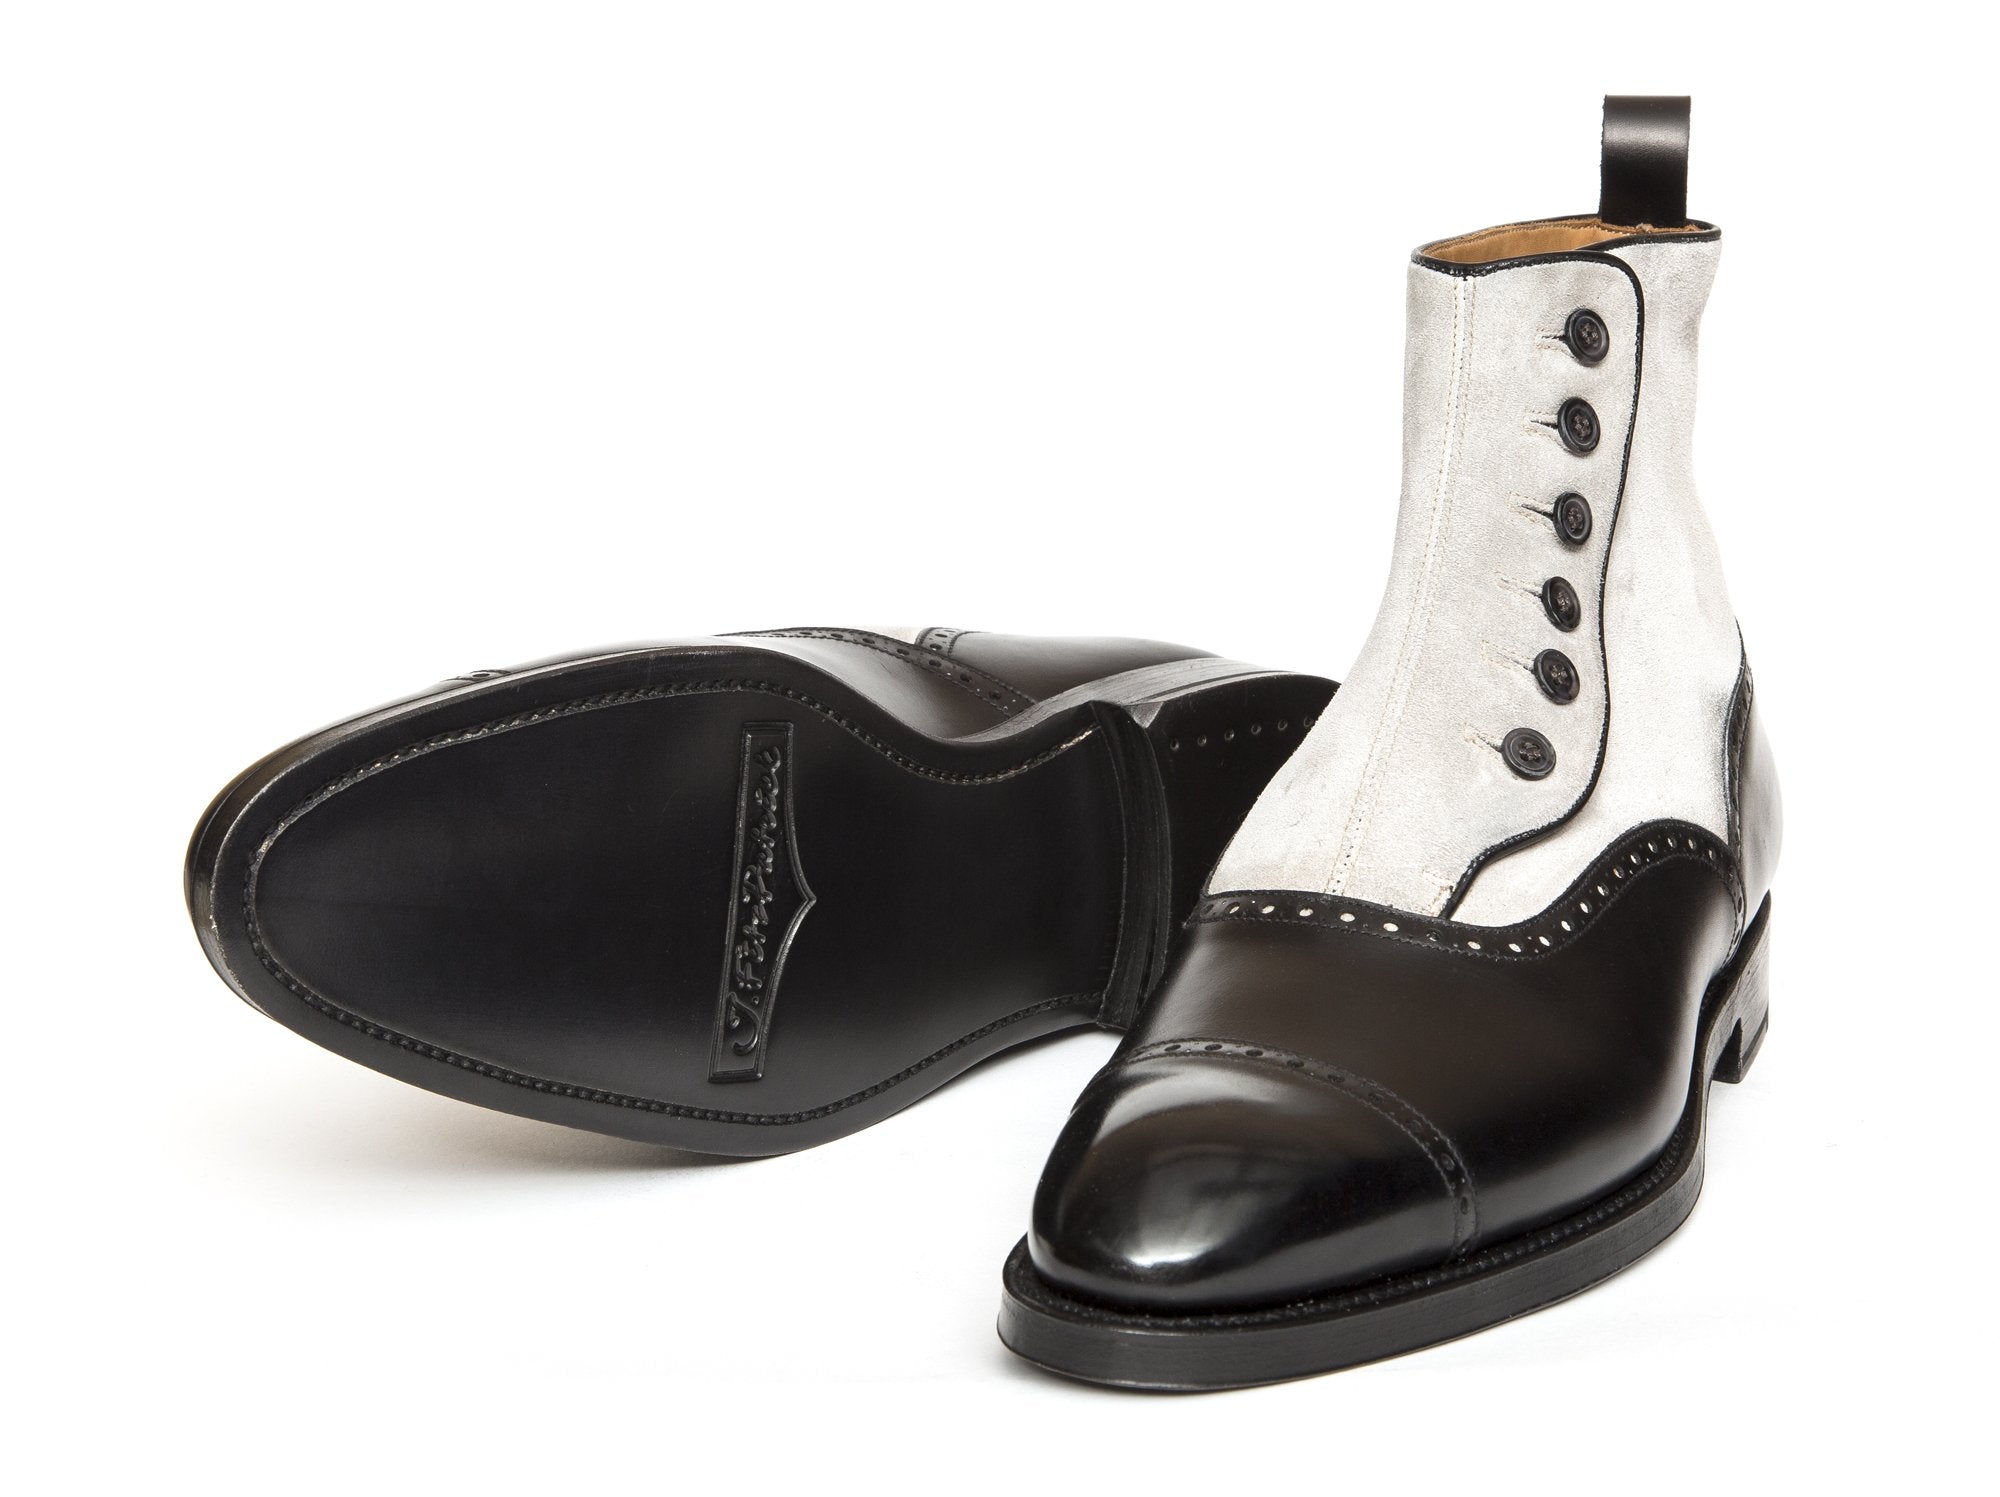 J.FitzPatrick Footwear - Carkeek - Black Calf / Light Grey Suede - NGT last - Double Leather Sole